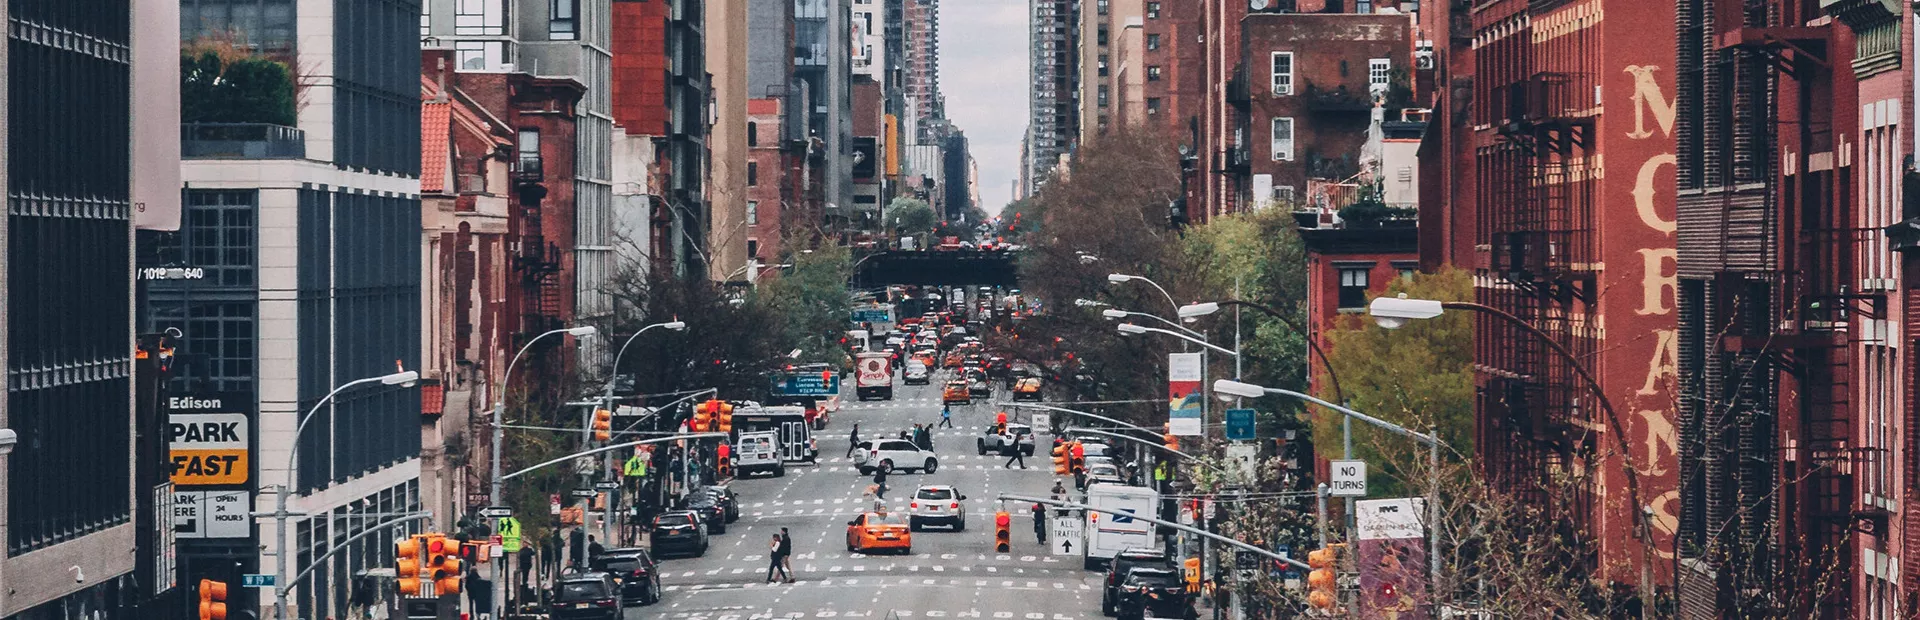 Street of New York showing population  